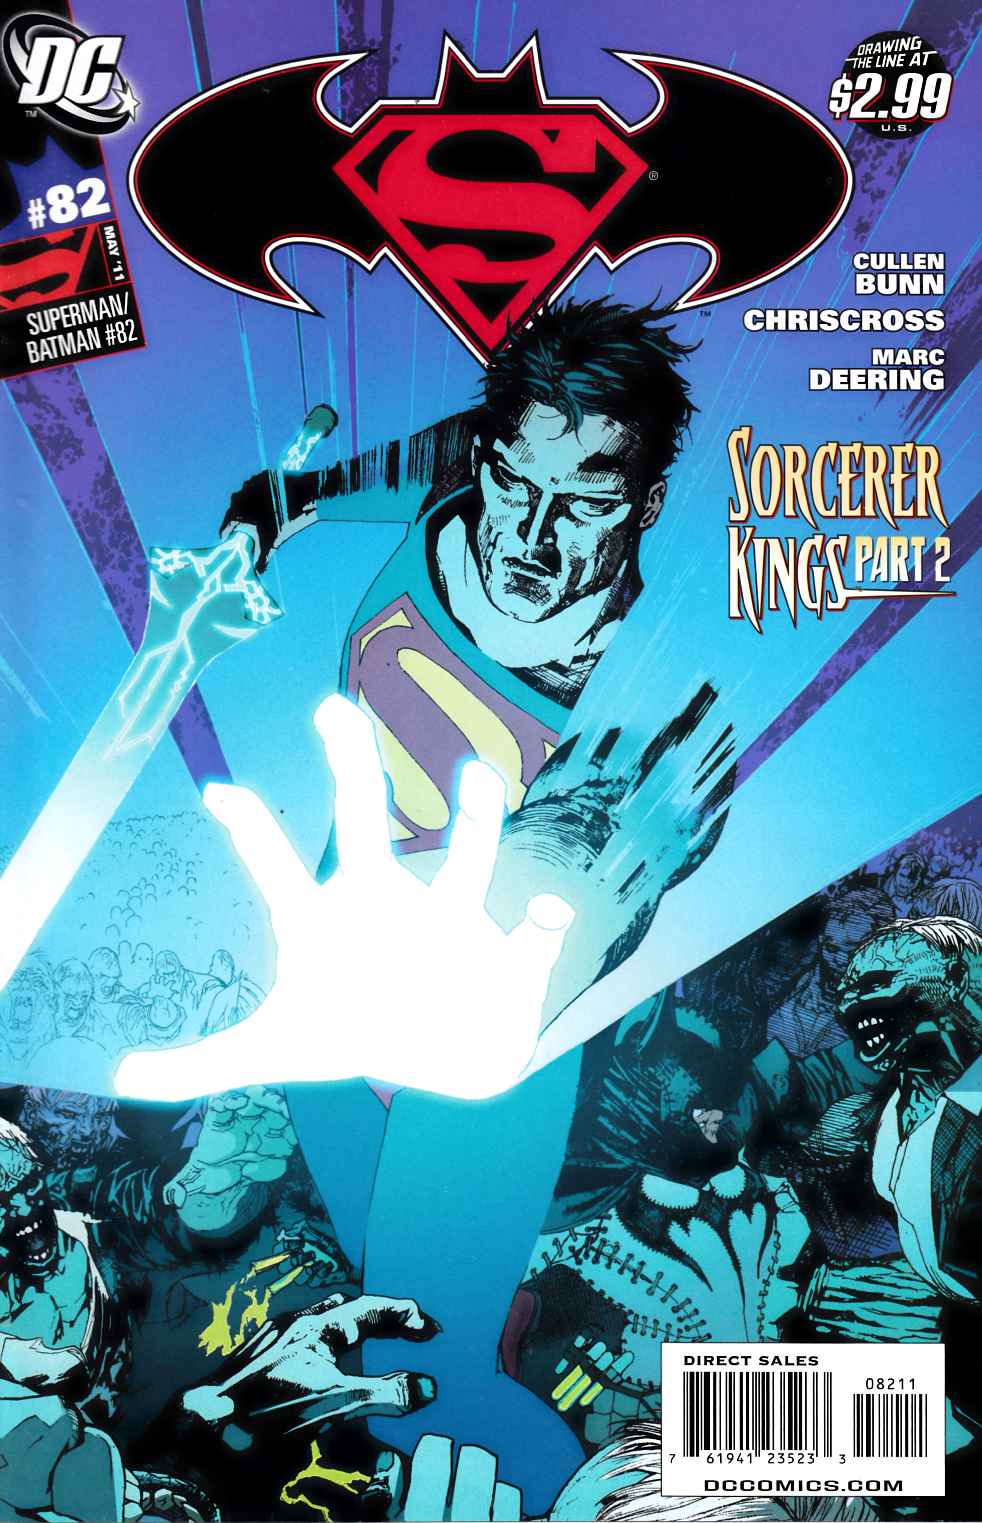 Superman Batman #82 Near Mint (9.4) [DC Comic]